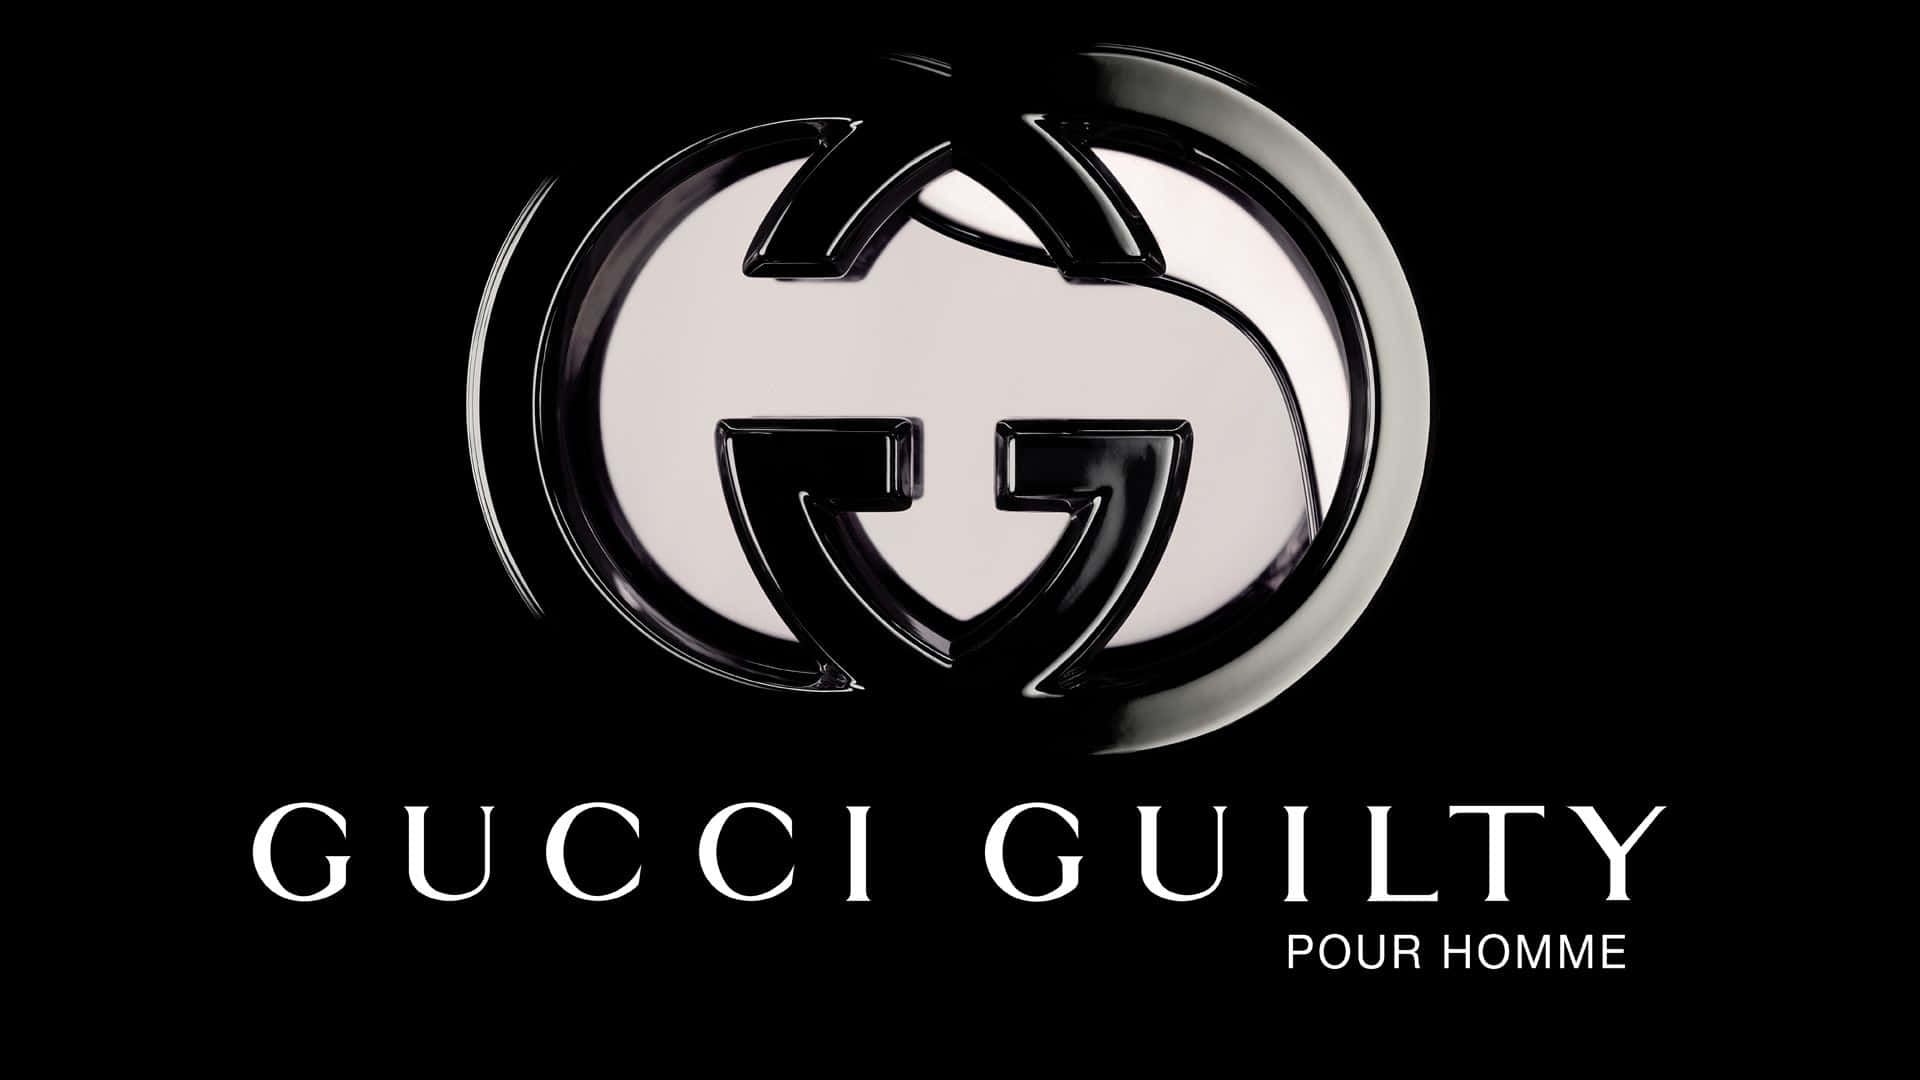 Kunstneriskskinnende Sølv Gucci Guilty Logo Baggrund.